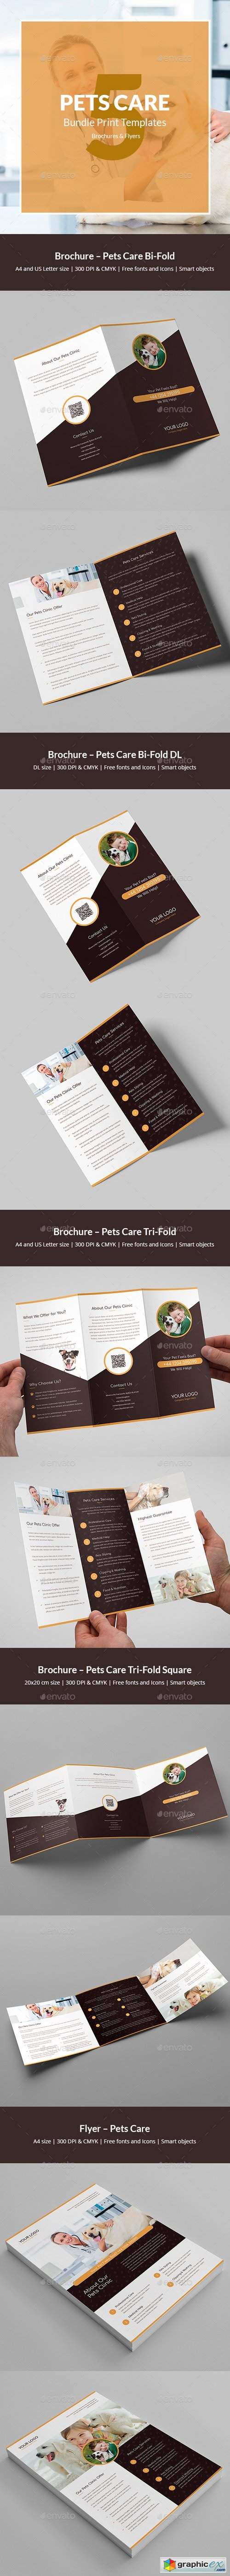 Pets Care – Bundle Print Templates 5 in 1